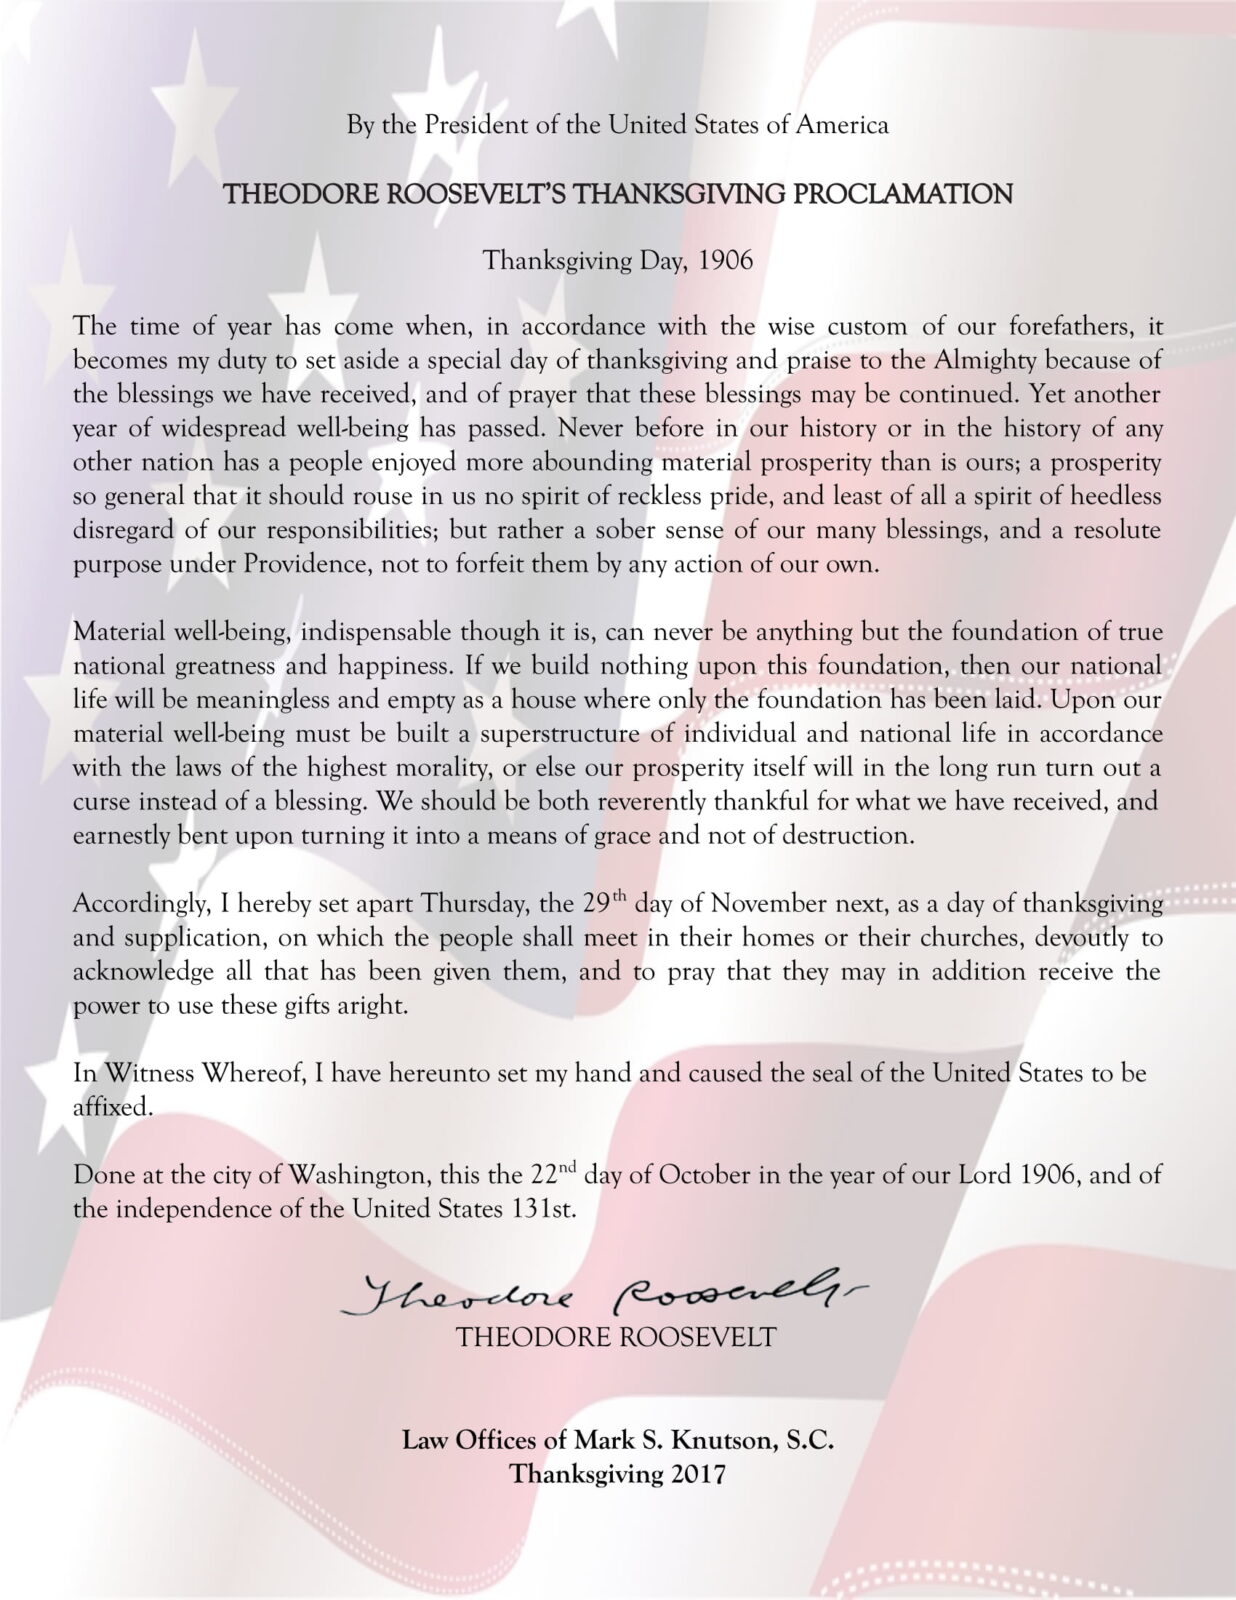 Thanksgiving proclamation